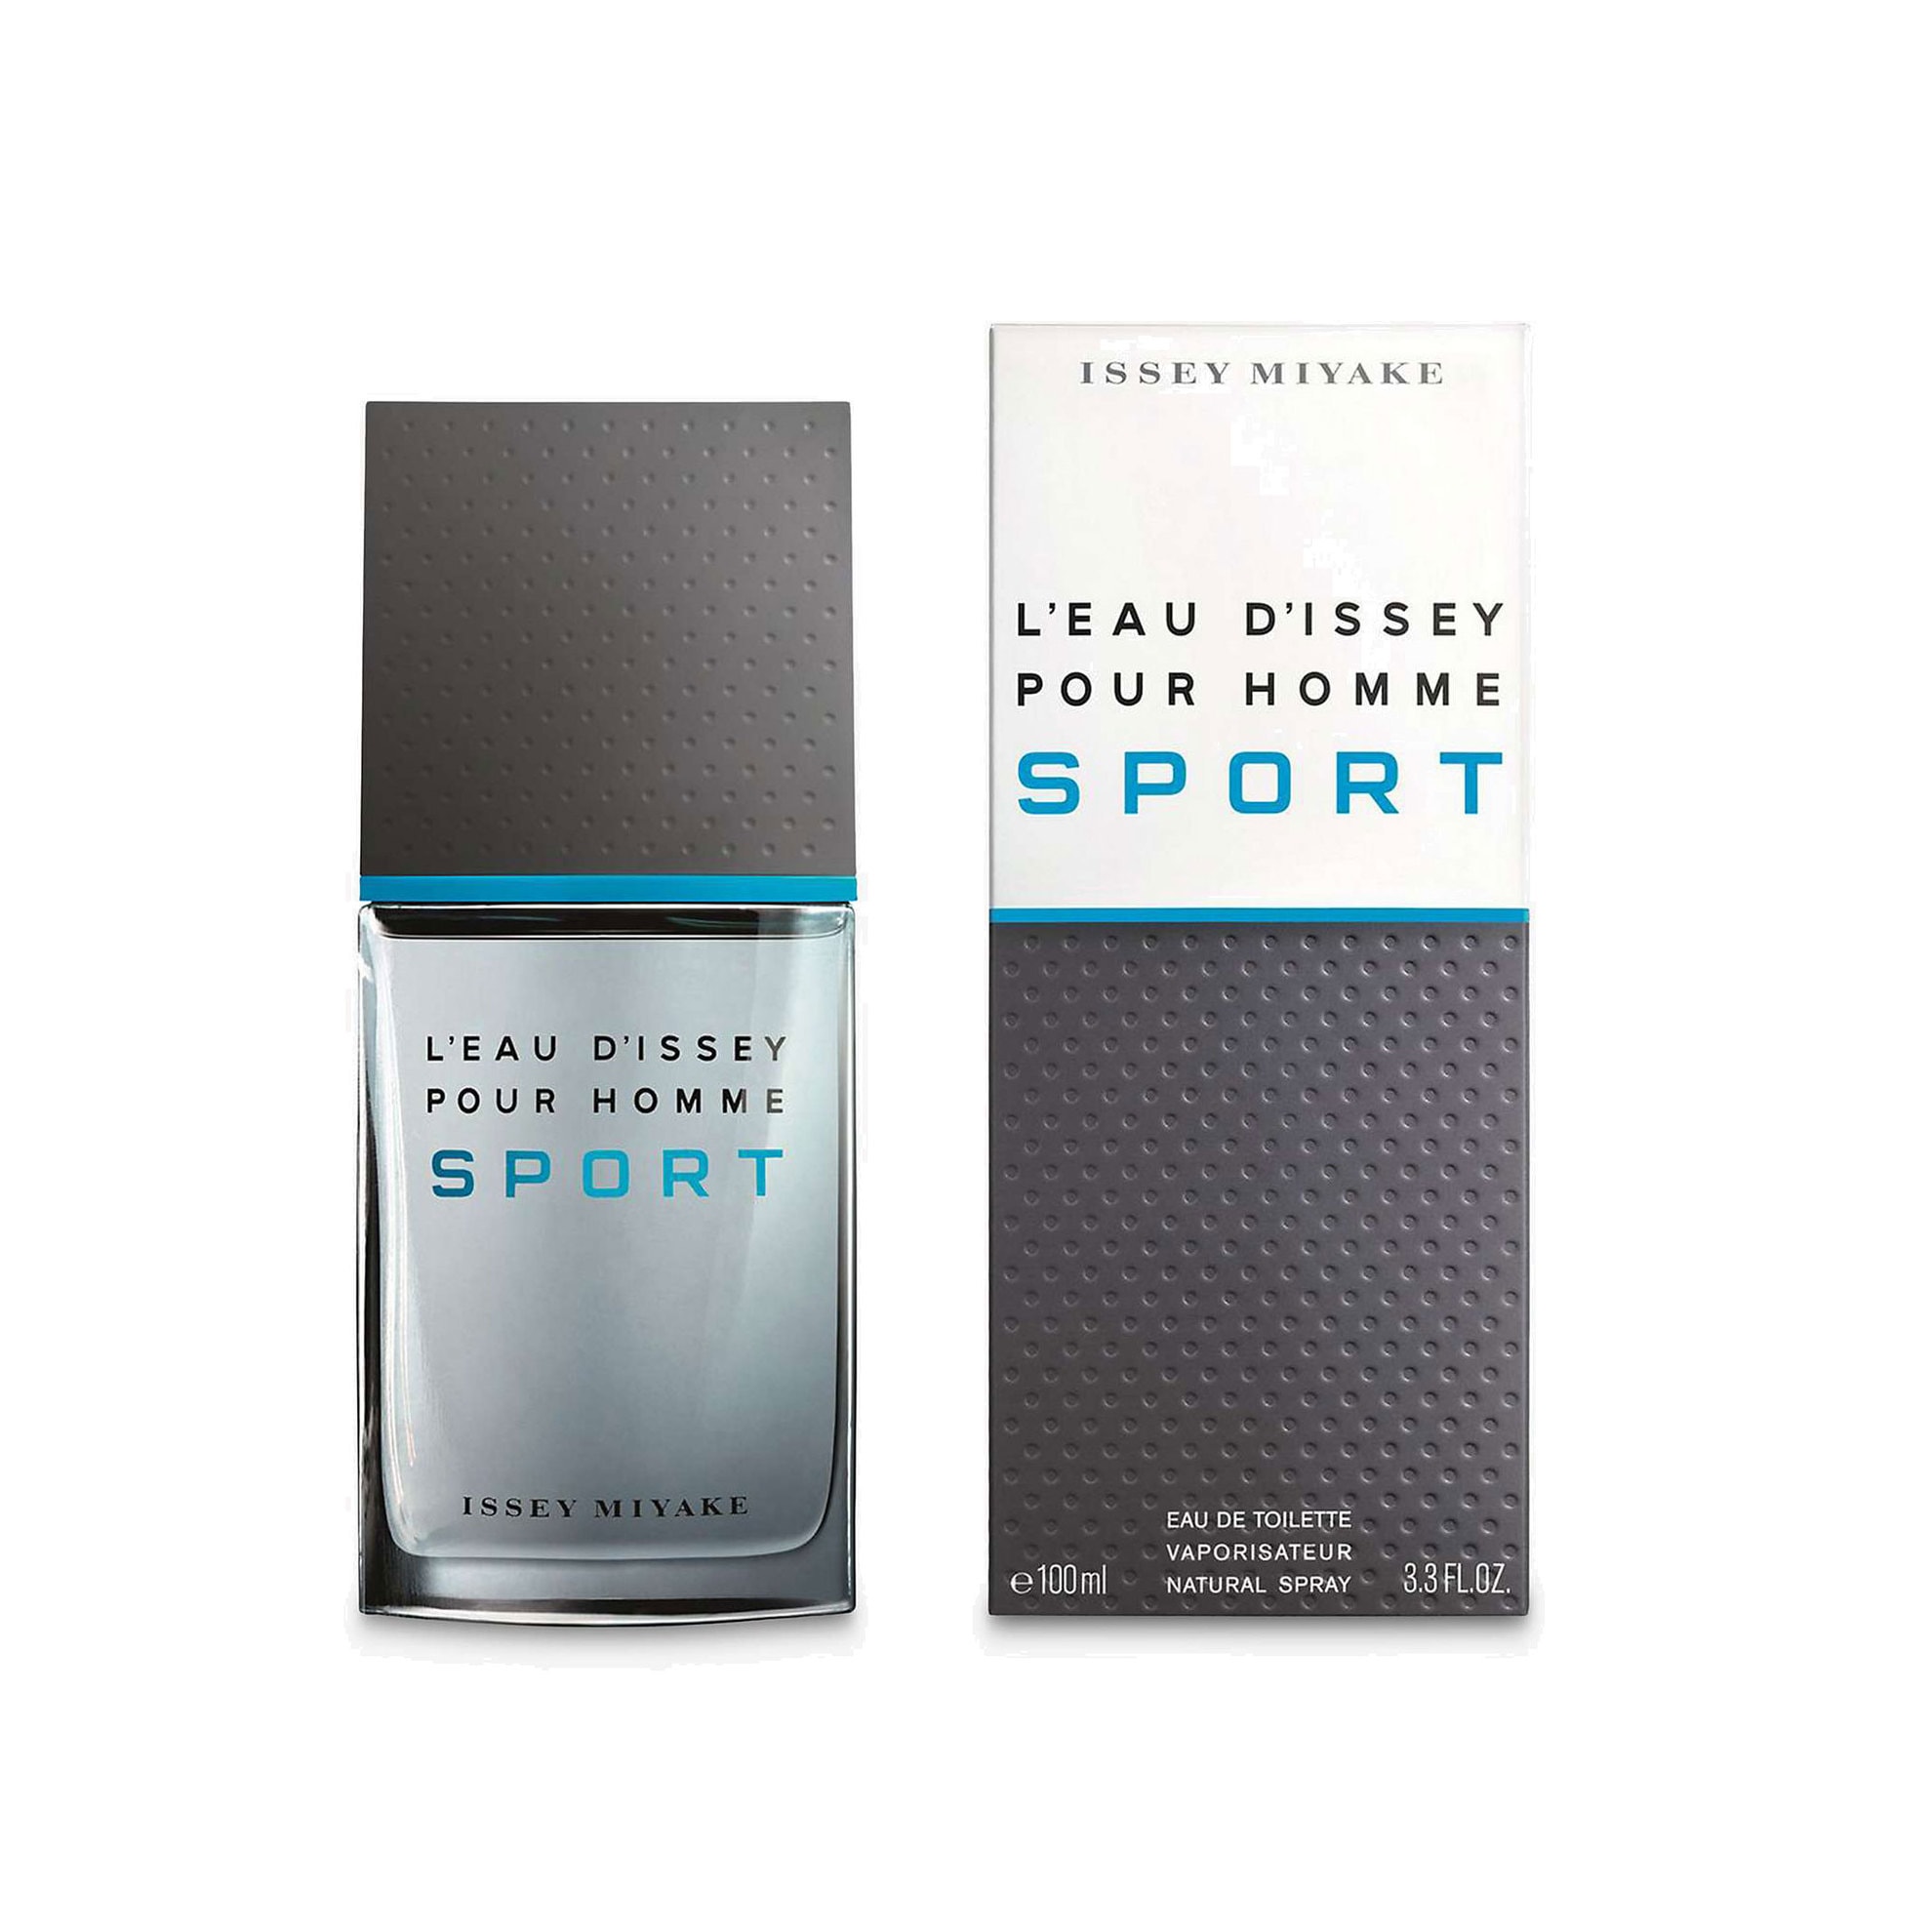 L’eau Dissey Pour Homme Sport » Issey Miyake » The Parfumerie » Sri Lanka